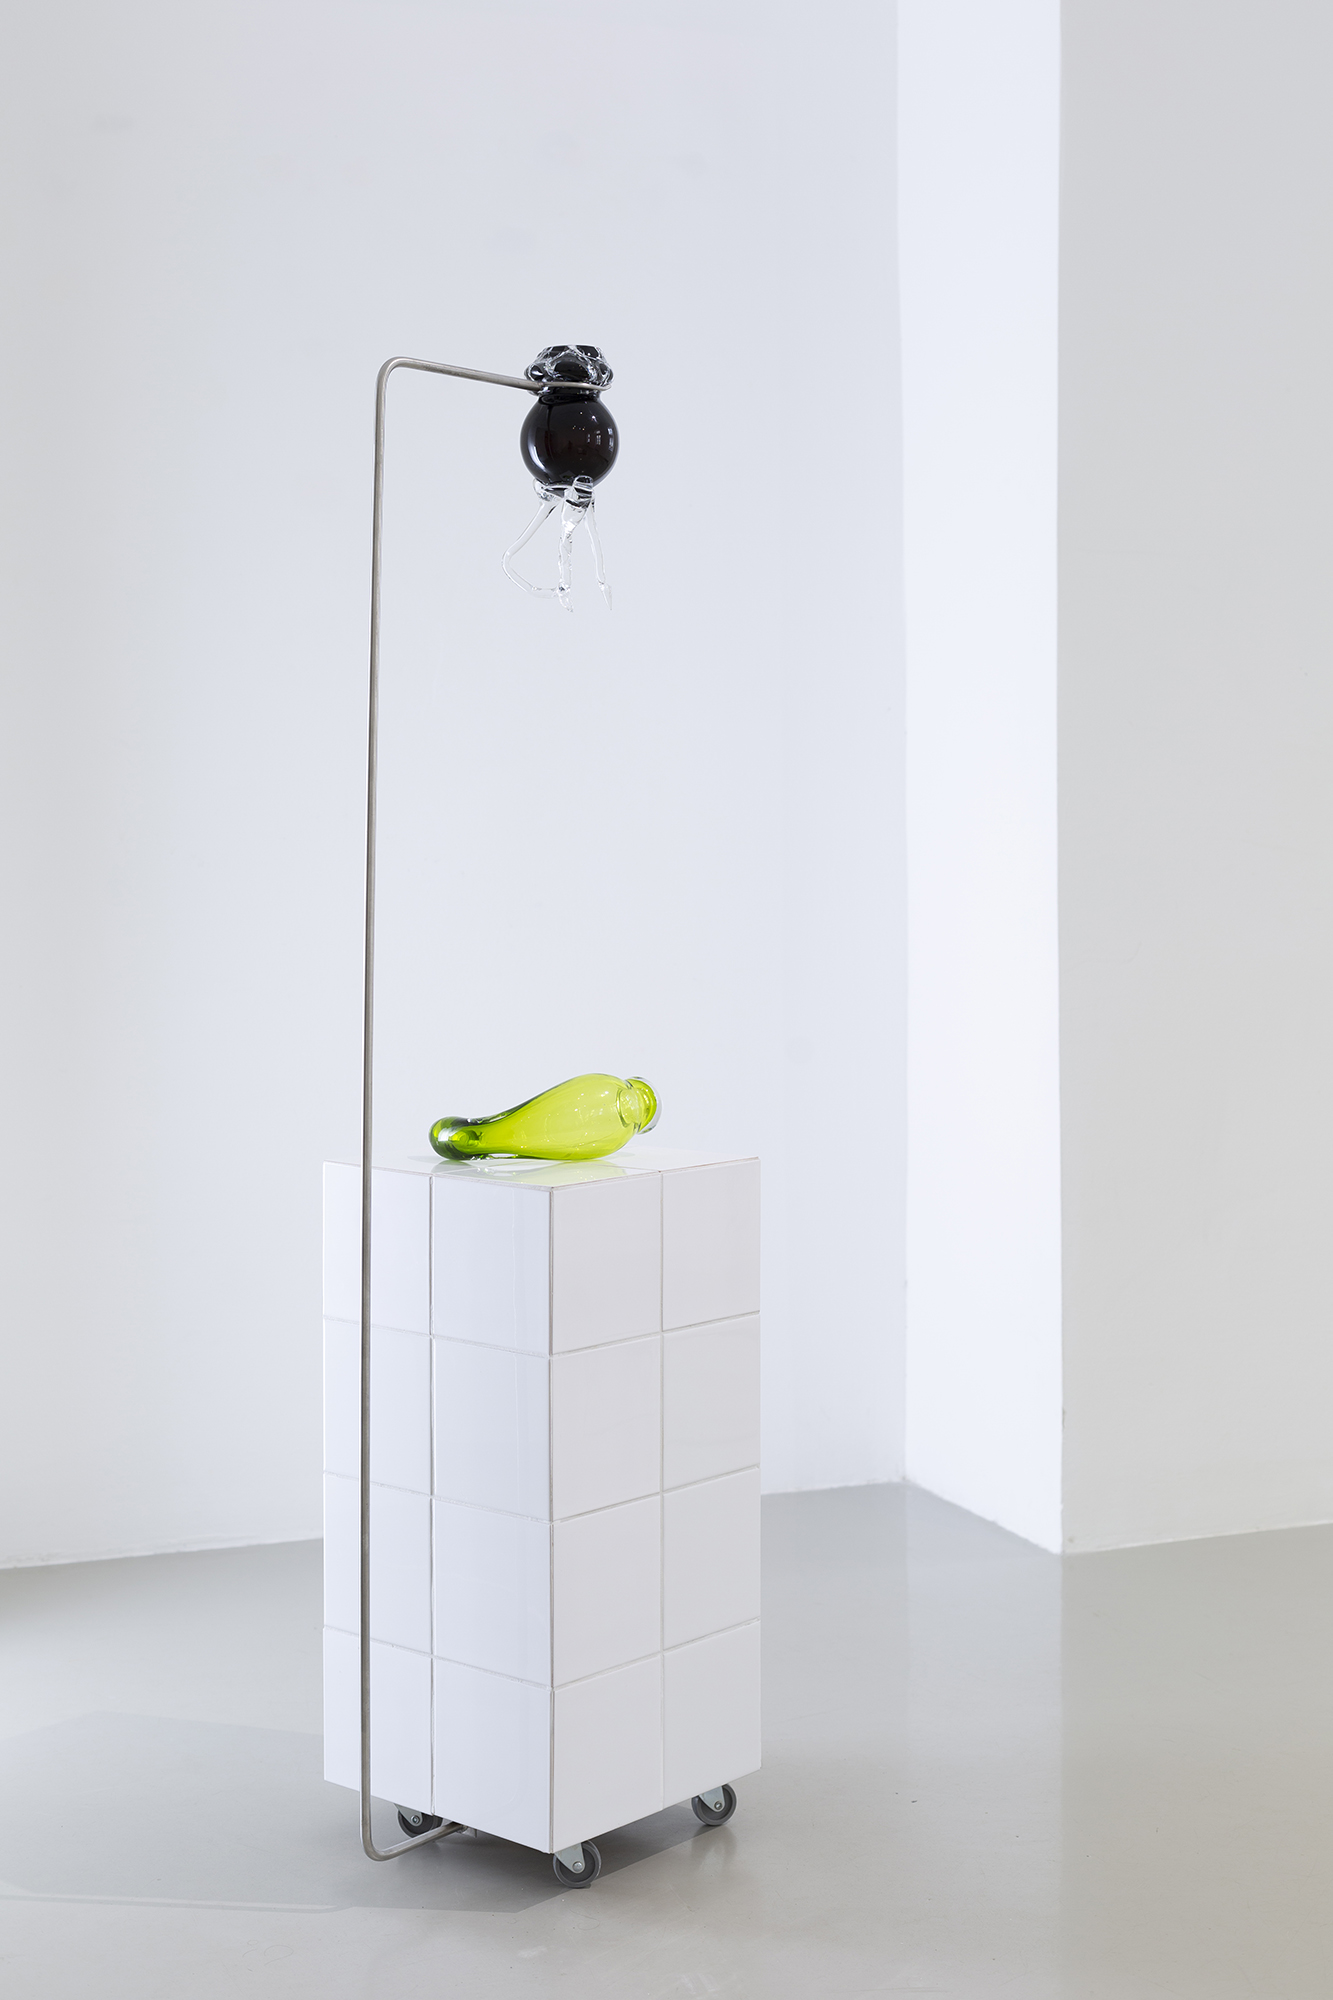 Ádám ALBERT: Still Life I, 2020
blown glass, tiles, stainless steel, 147 x 31 x 42 cm